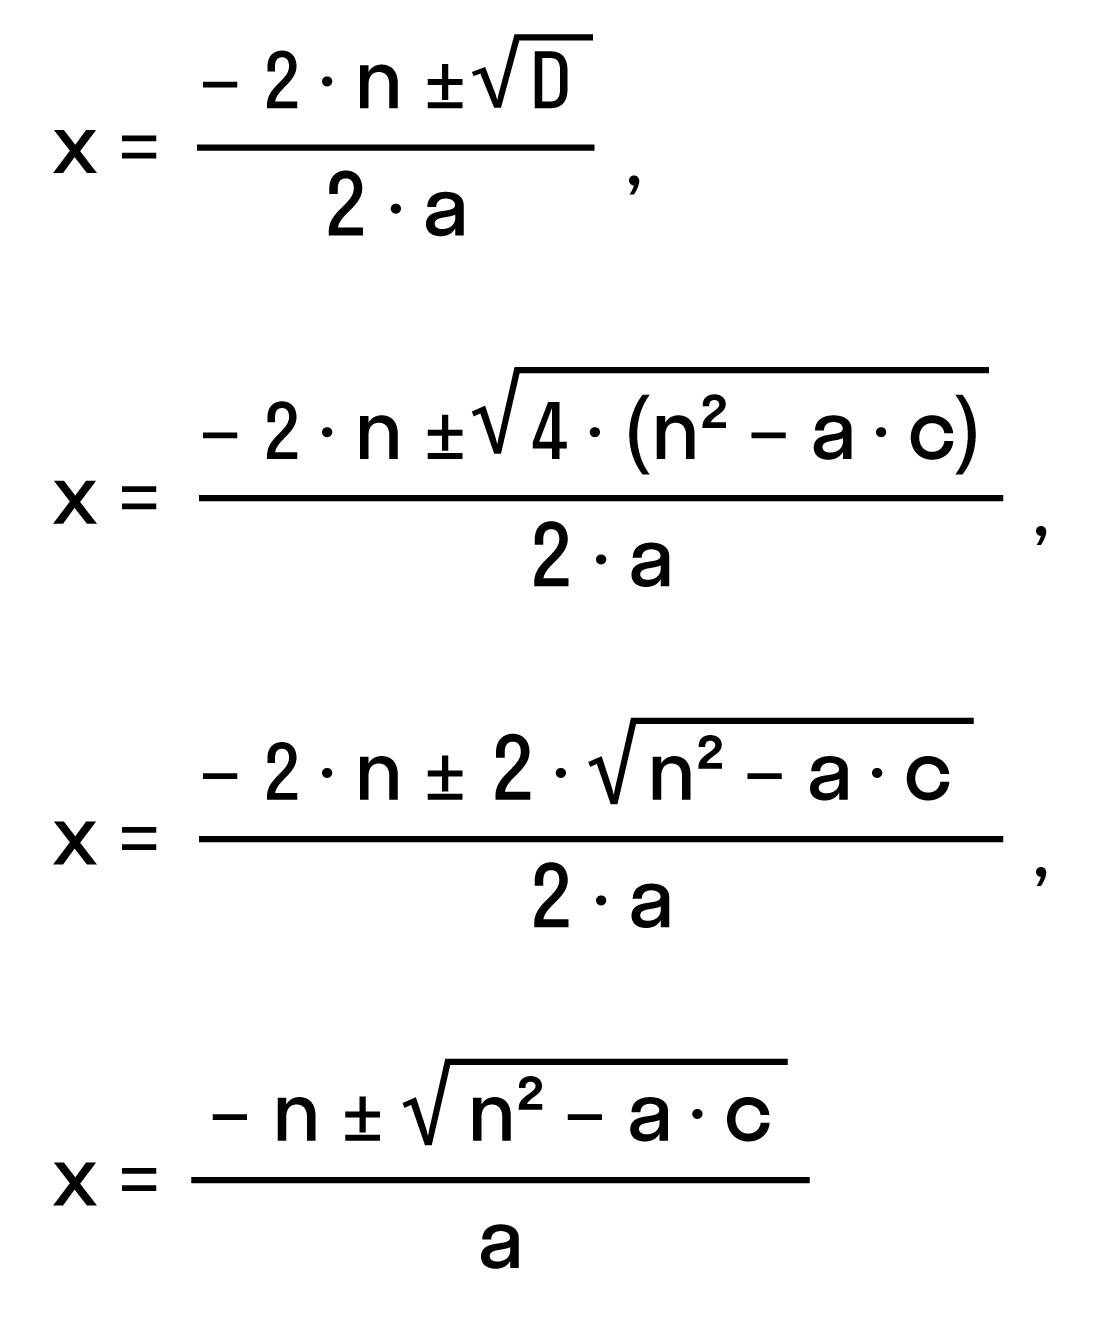 решение квадратного уравнения ax<sup>2</sup> + 2nx + c = 0